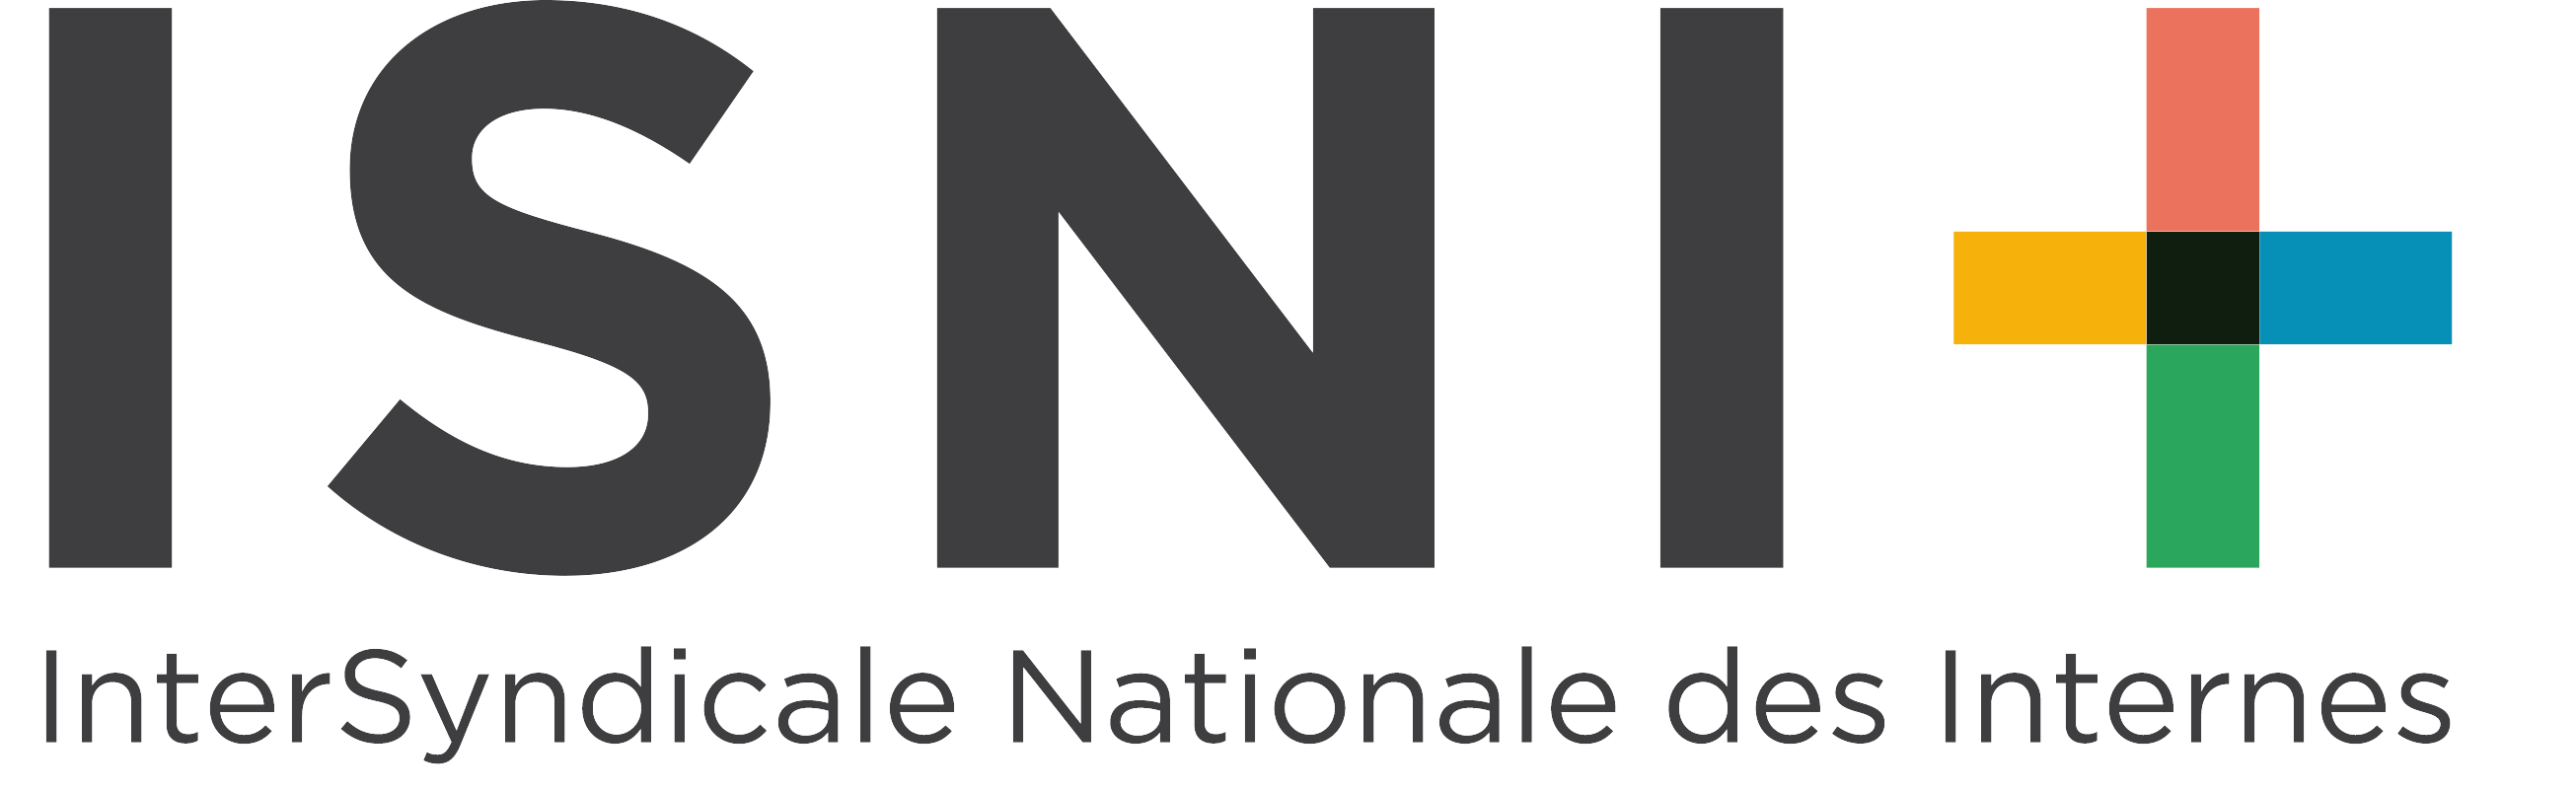 Inter Syndicat National des Internes